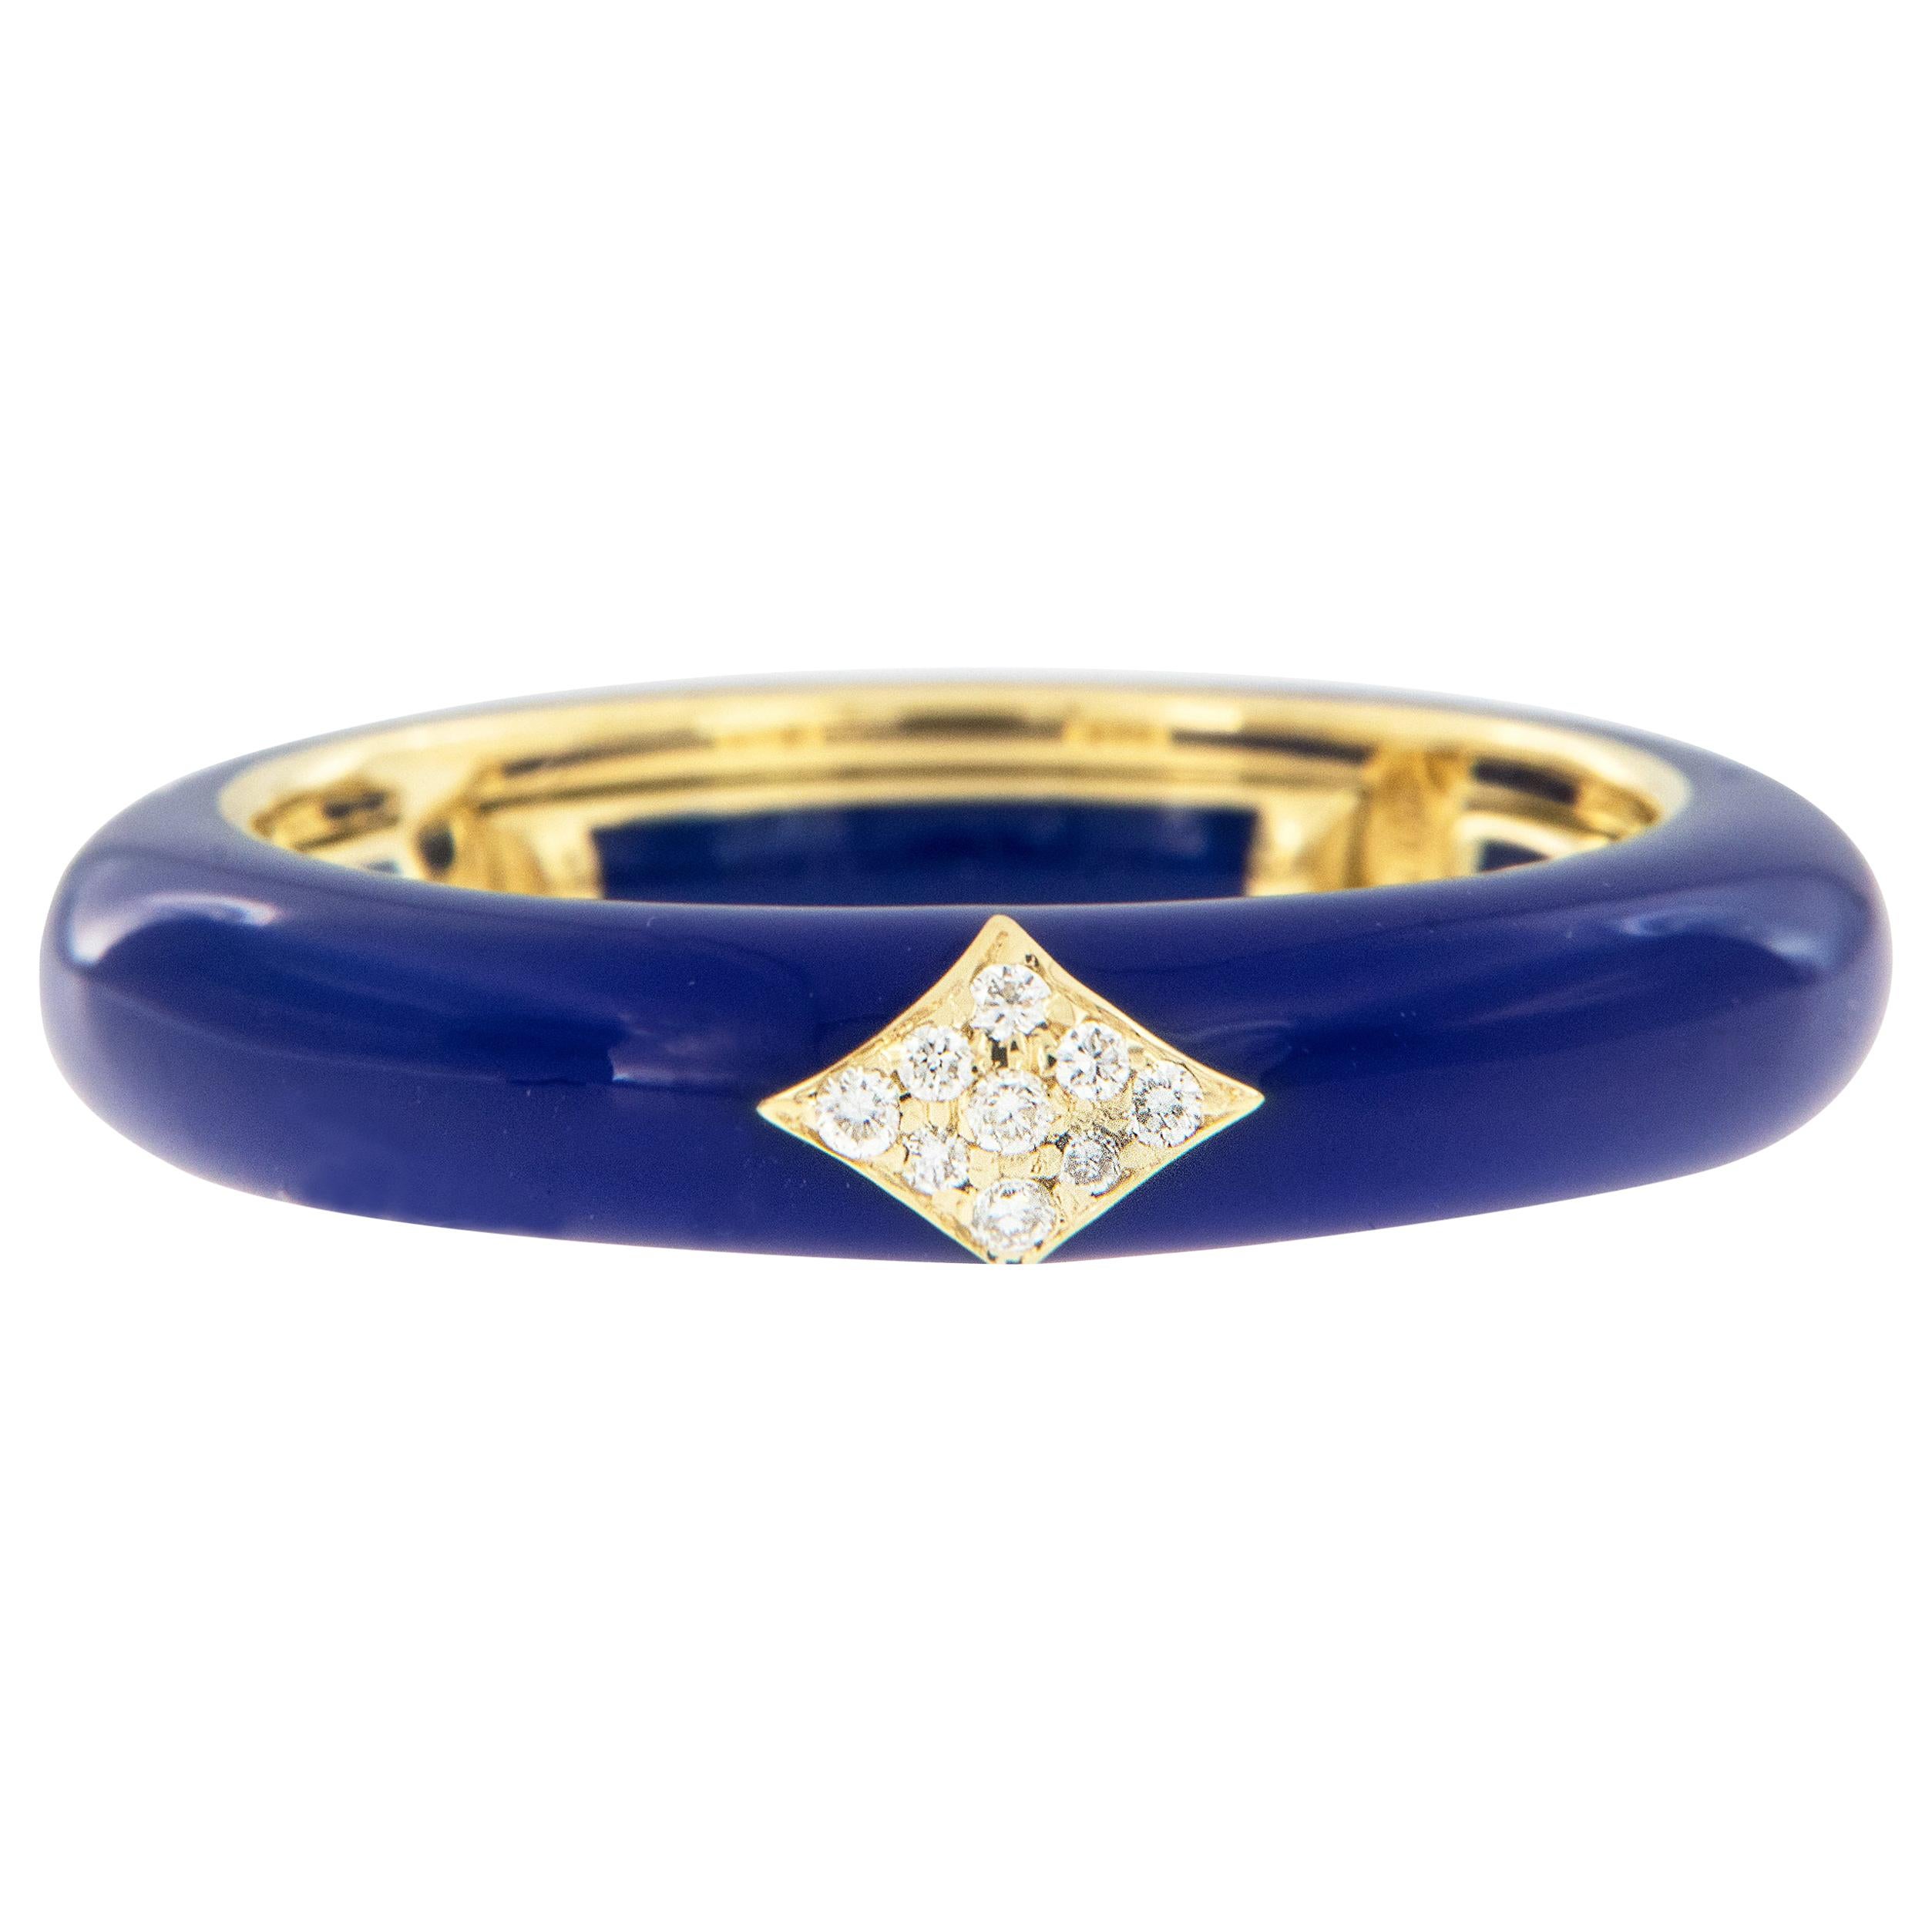 18 Karat Yellow Gold Enamel and Diamond Adjustable Ring Made in Italy